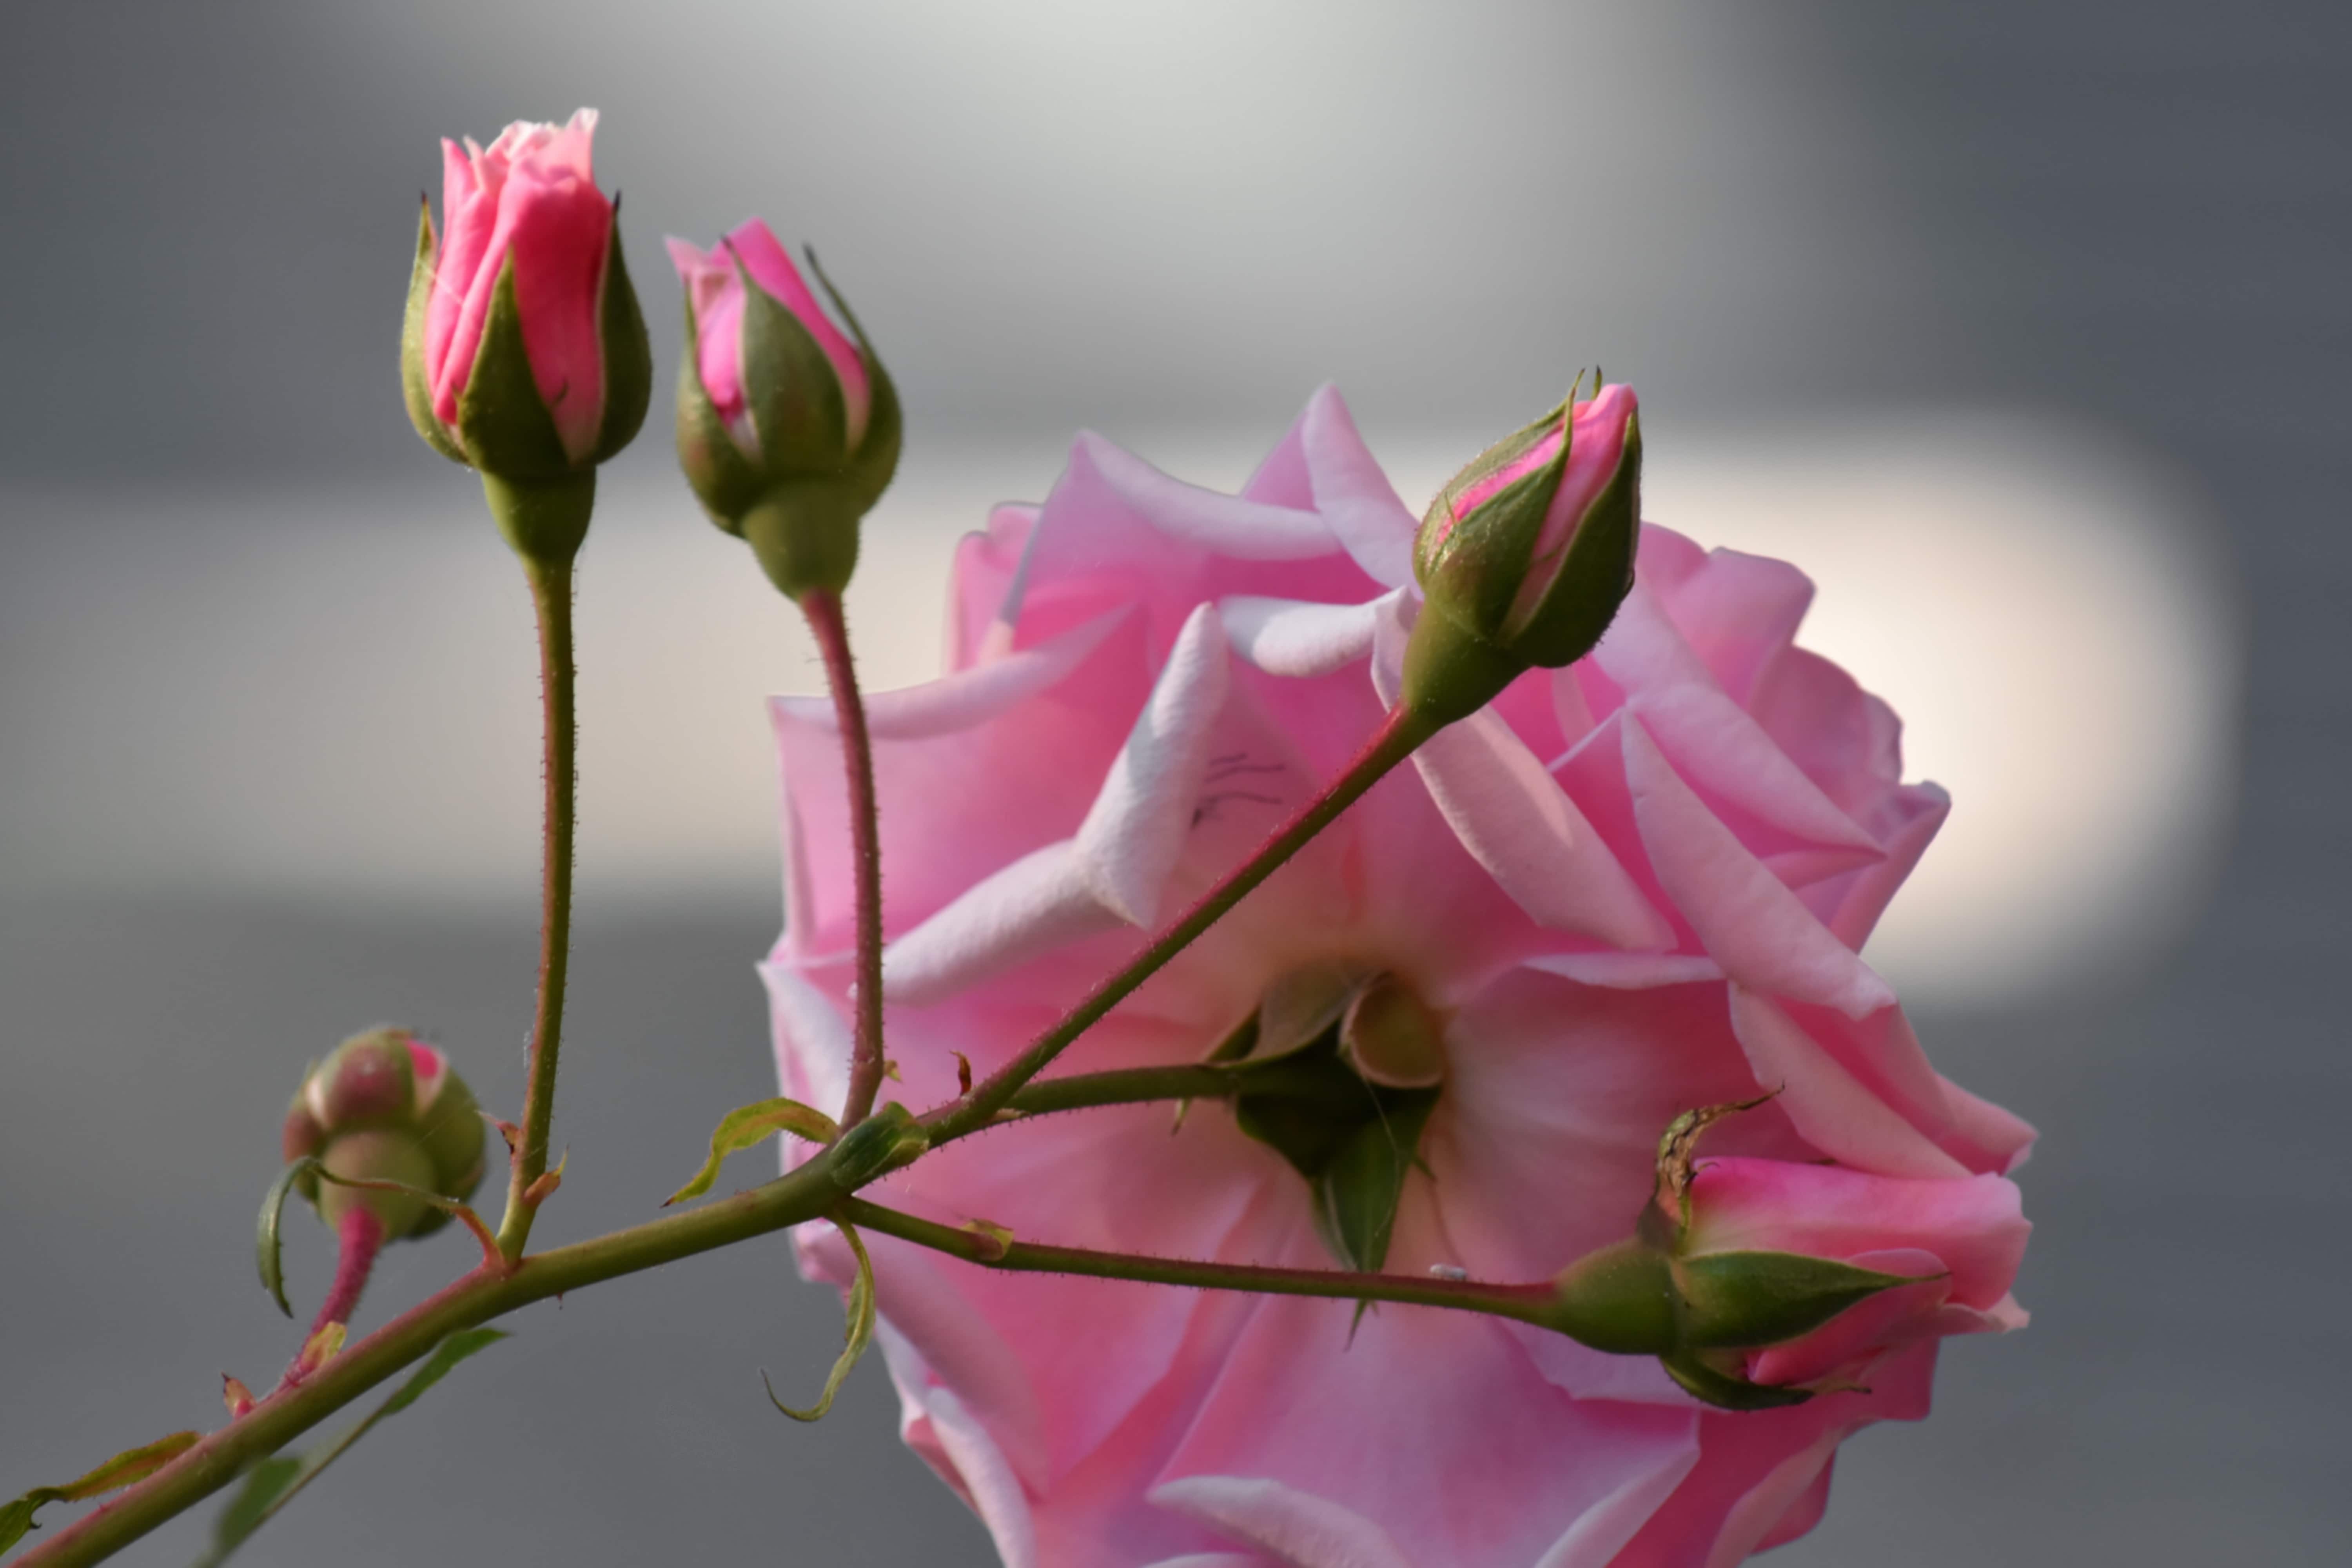 Free picture: flower bud, flower garden, pinkish, roses, pink, petal, bud,  flower, nature, tulip